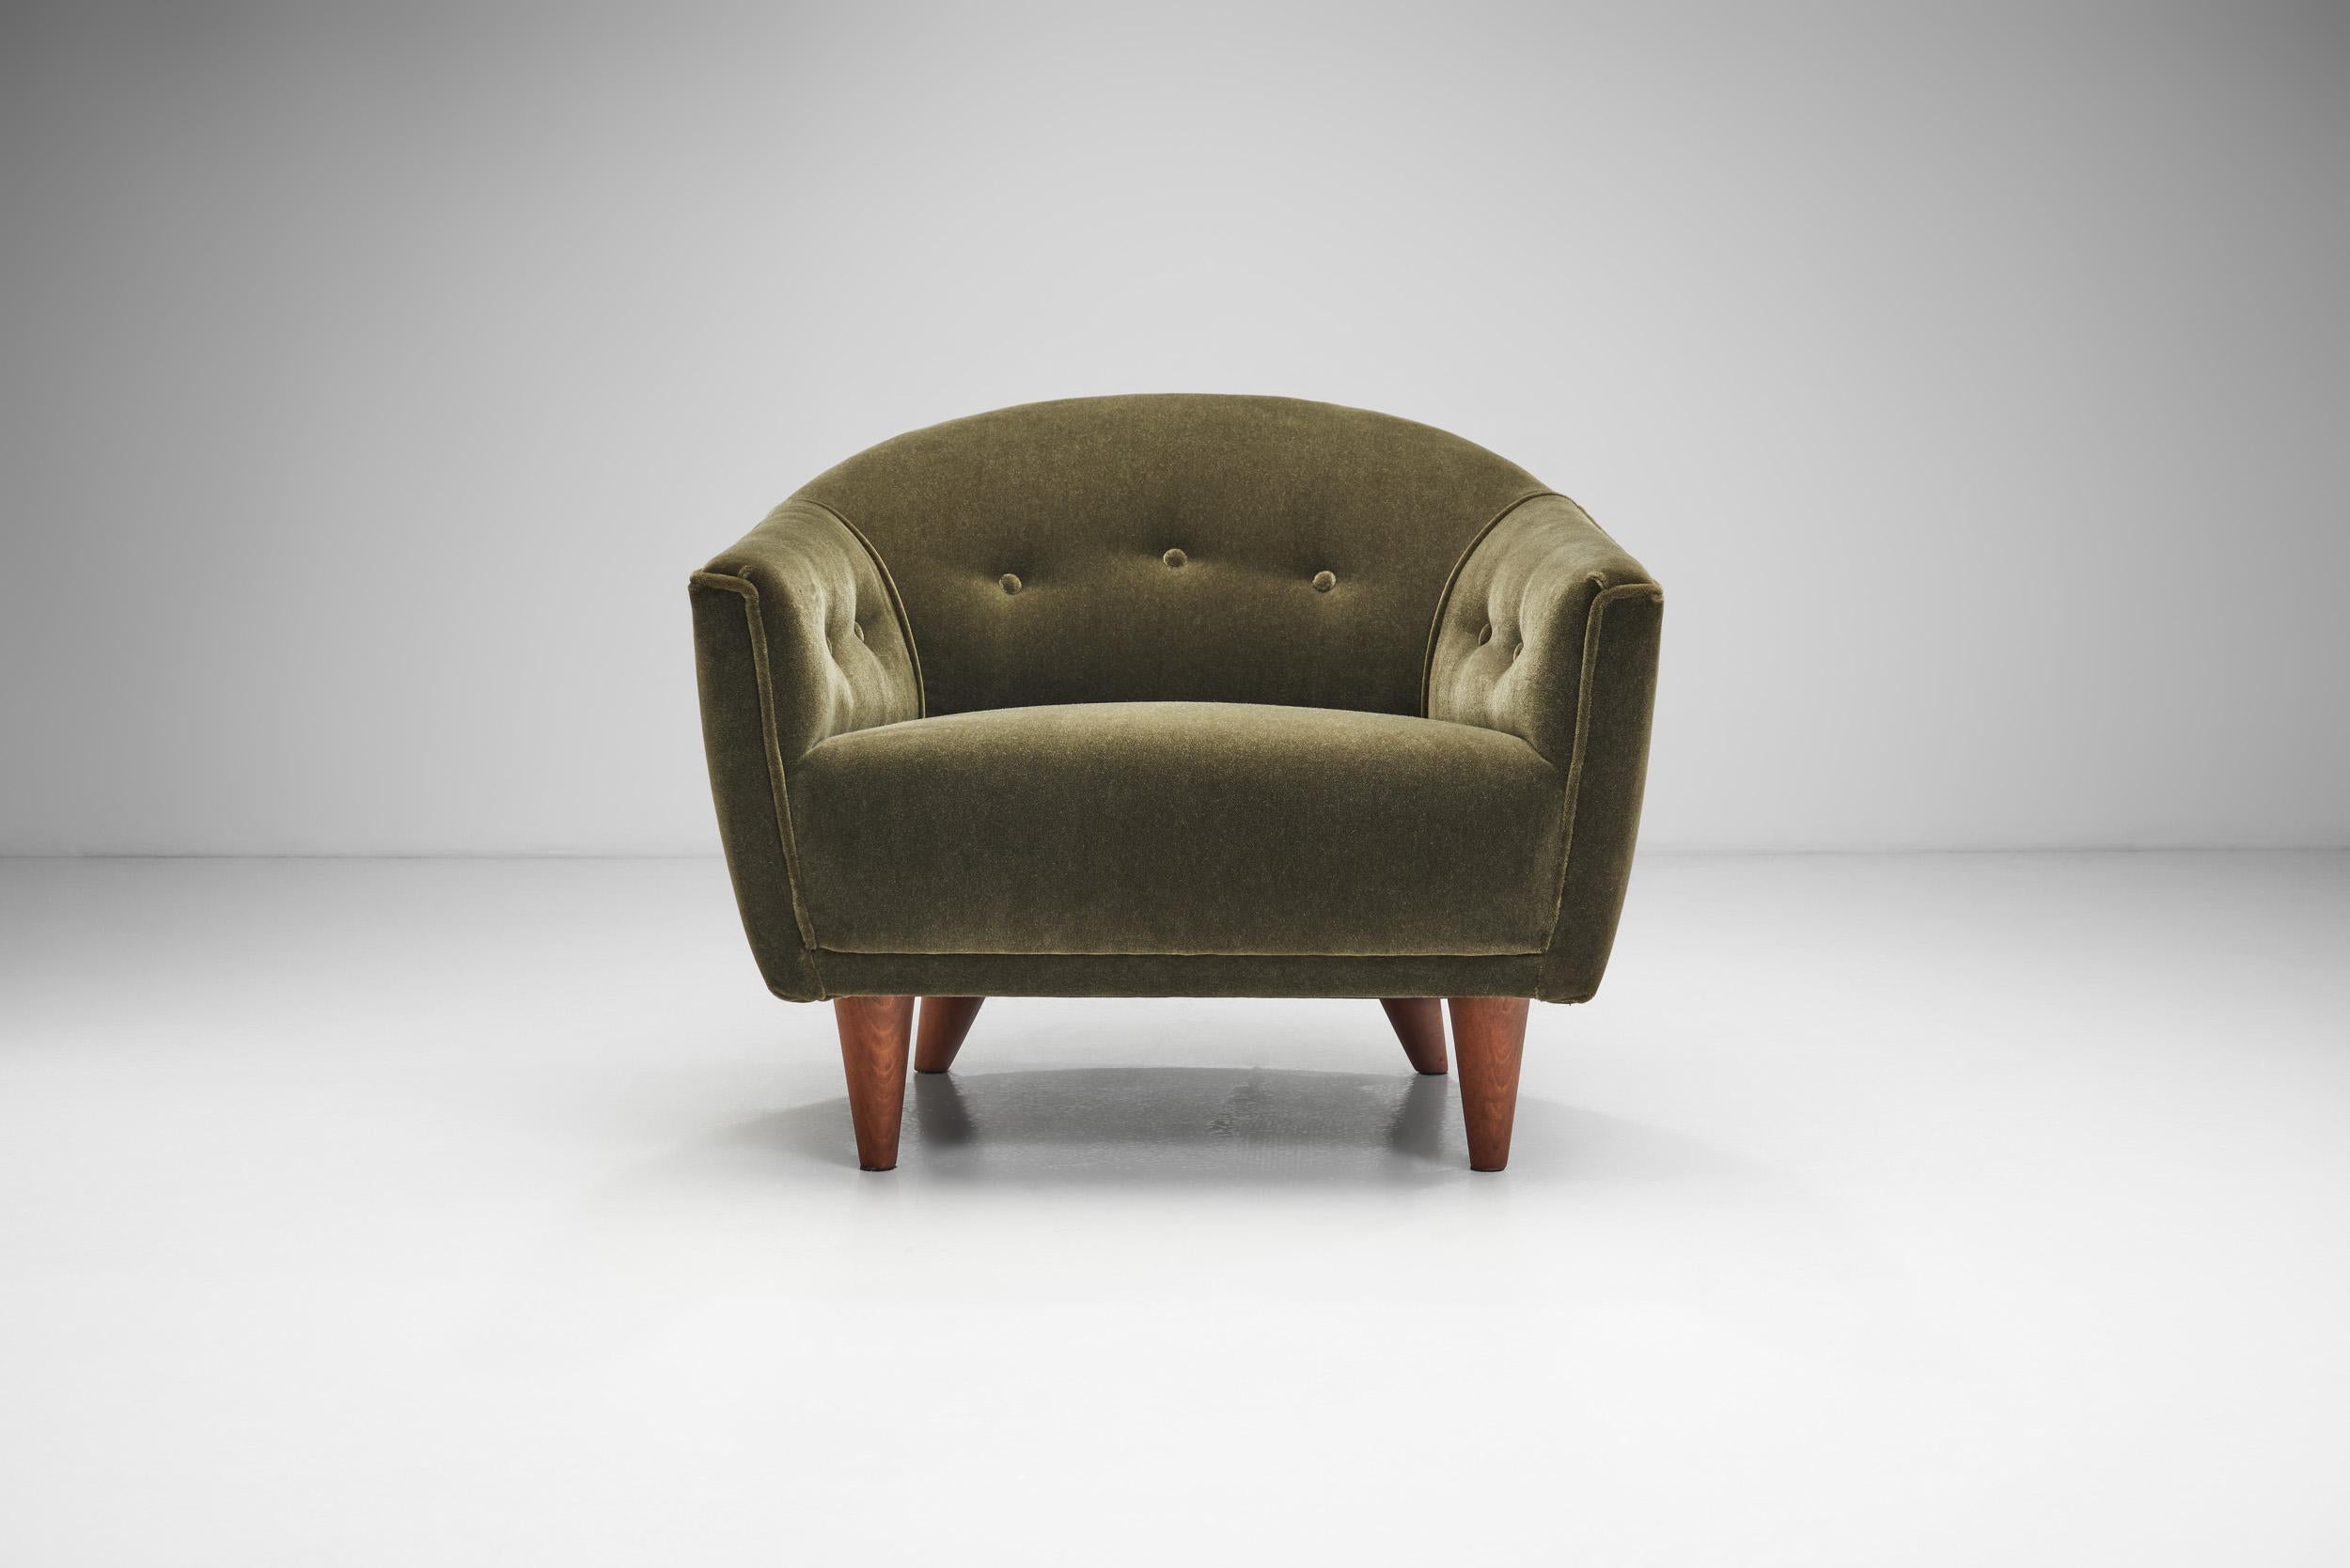 Upholstered Lounge Chairs in Oil Green Velvet, Europe ca 1950s For Sale 9